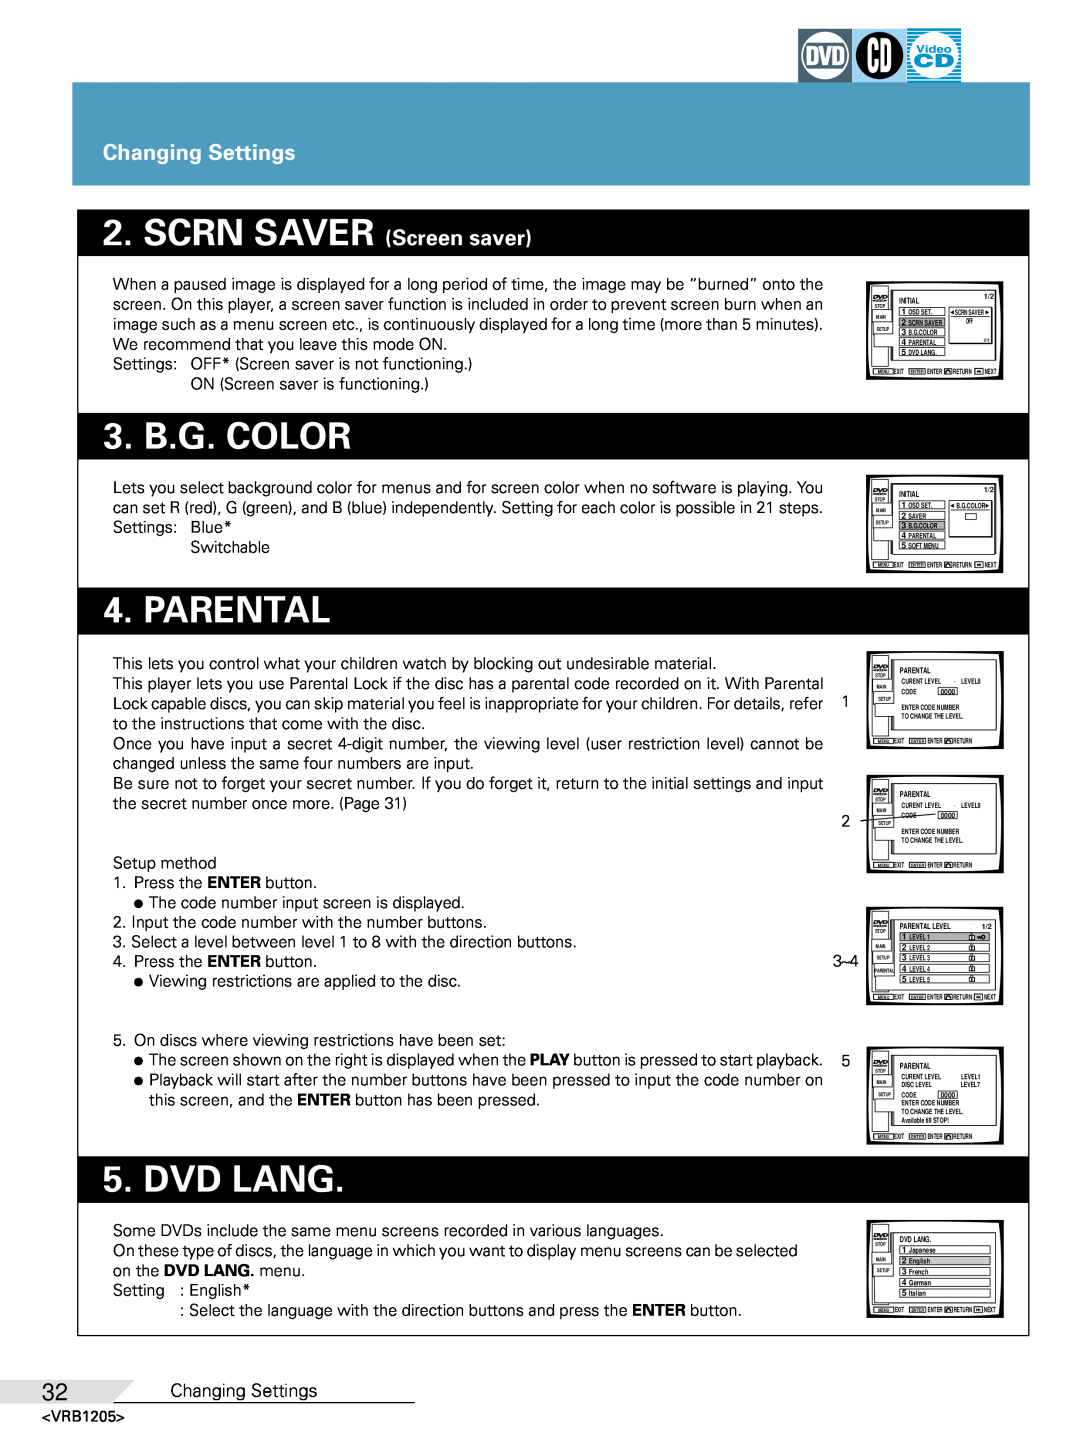 Pioneer DV-05 operating instructions SCRN SAVER Screen saver, 3. B.G. COLOR, Parental, Dvd Lang, Changing Settings 